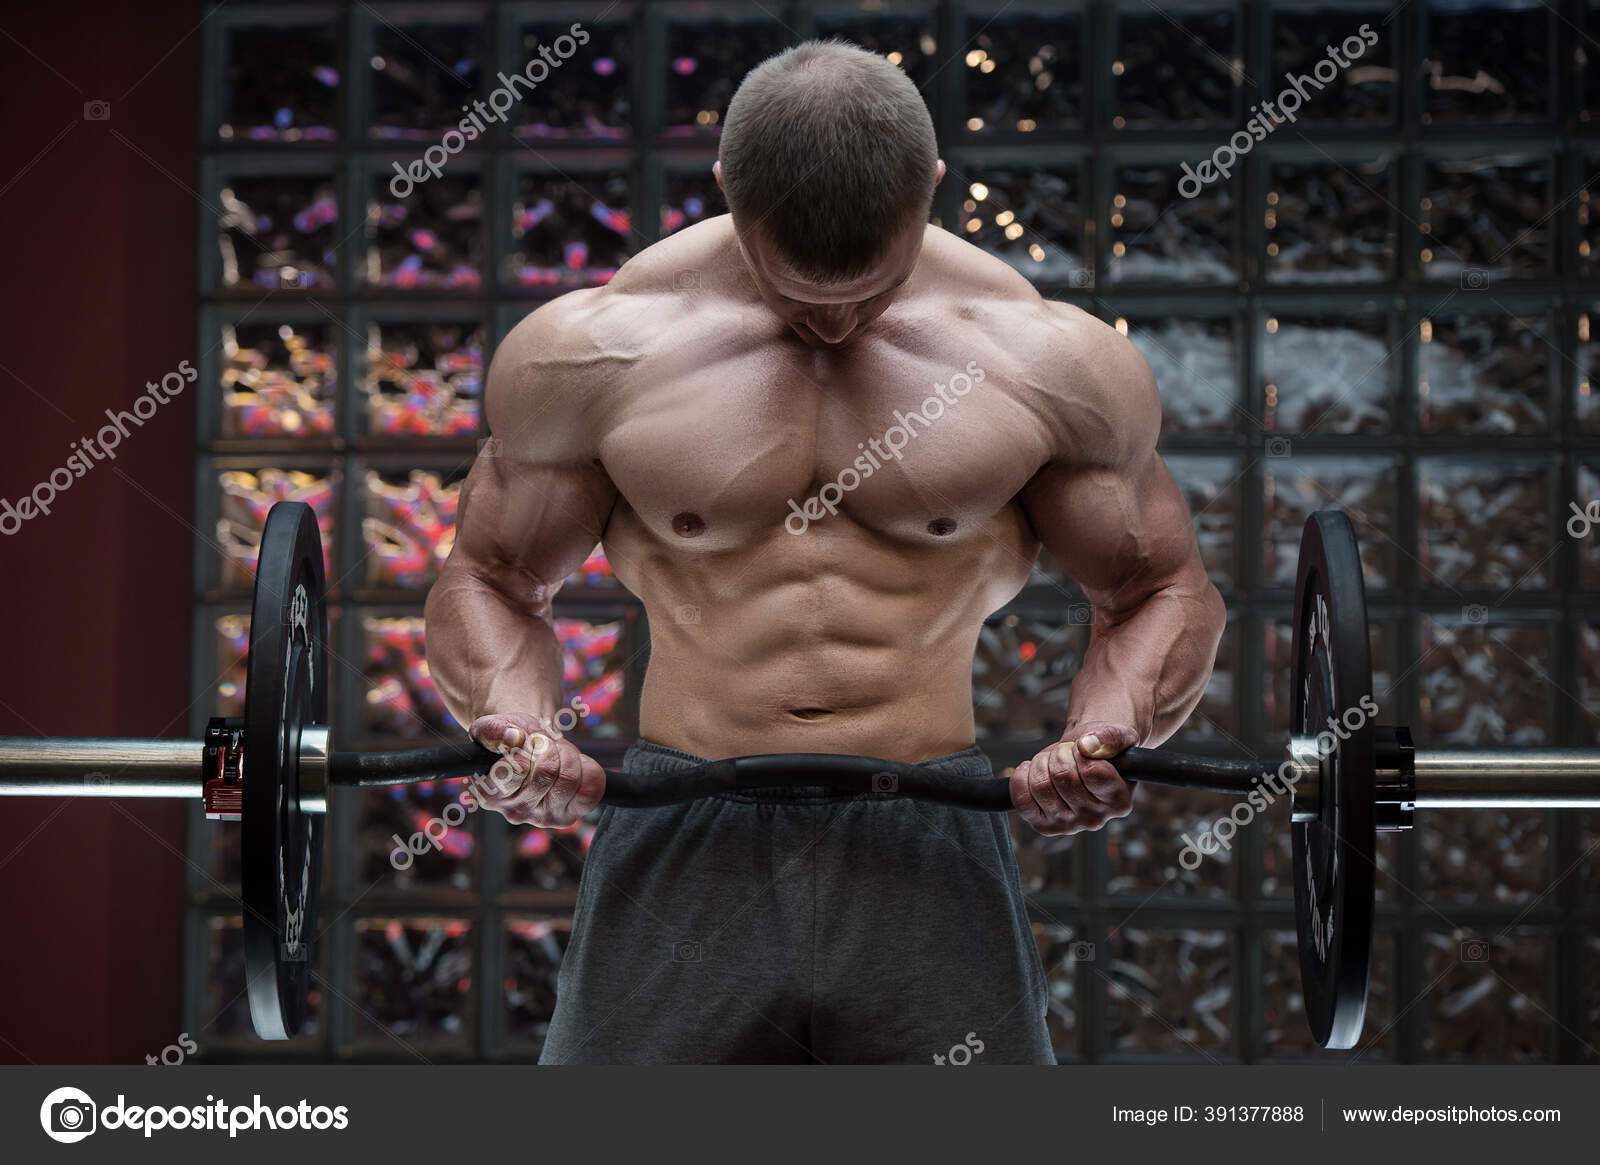 https://st4.depositphotos.com/8742290/39137/i/1600/depositphotos_391377888-stock-photo-fitness-man-pumping-arm-muscles.jpg